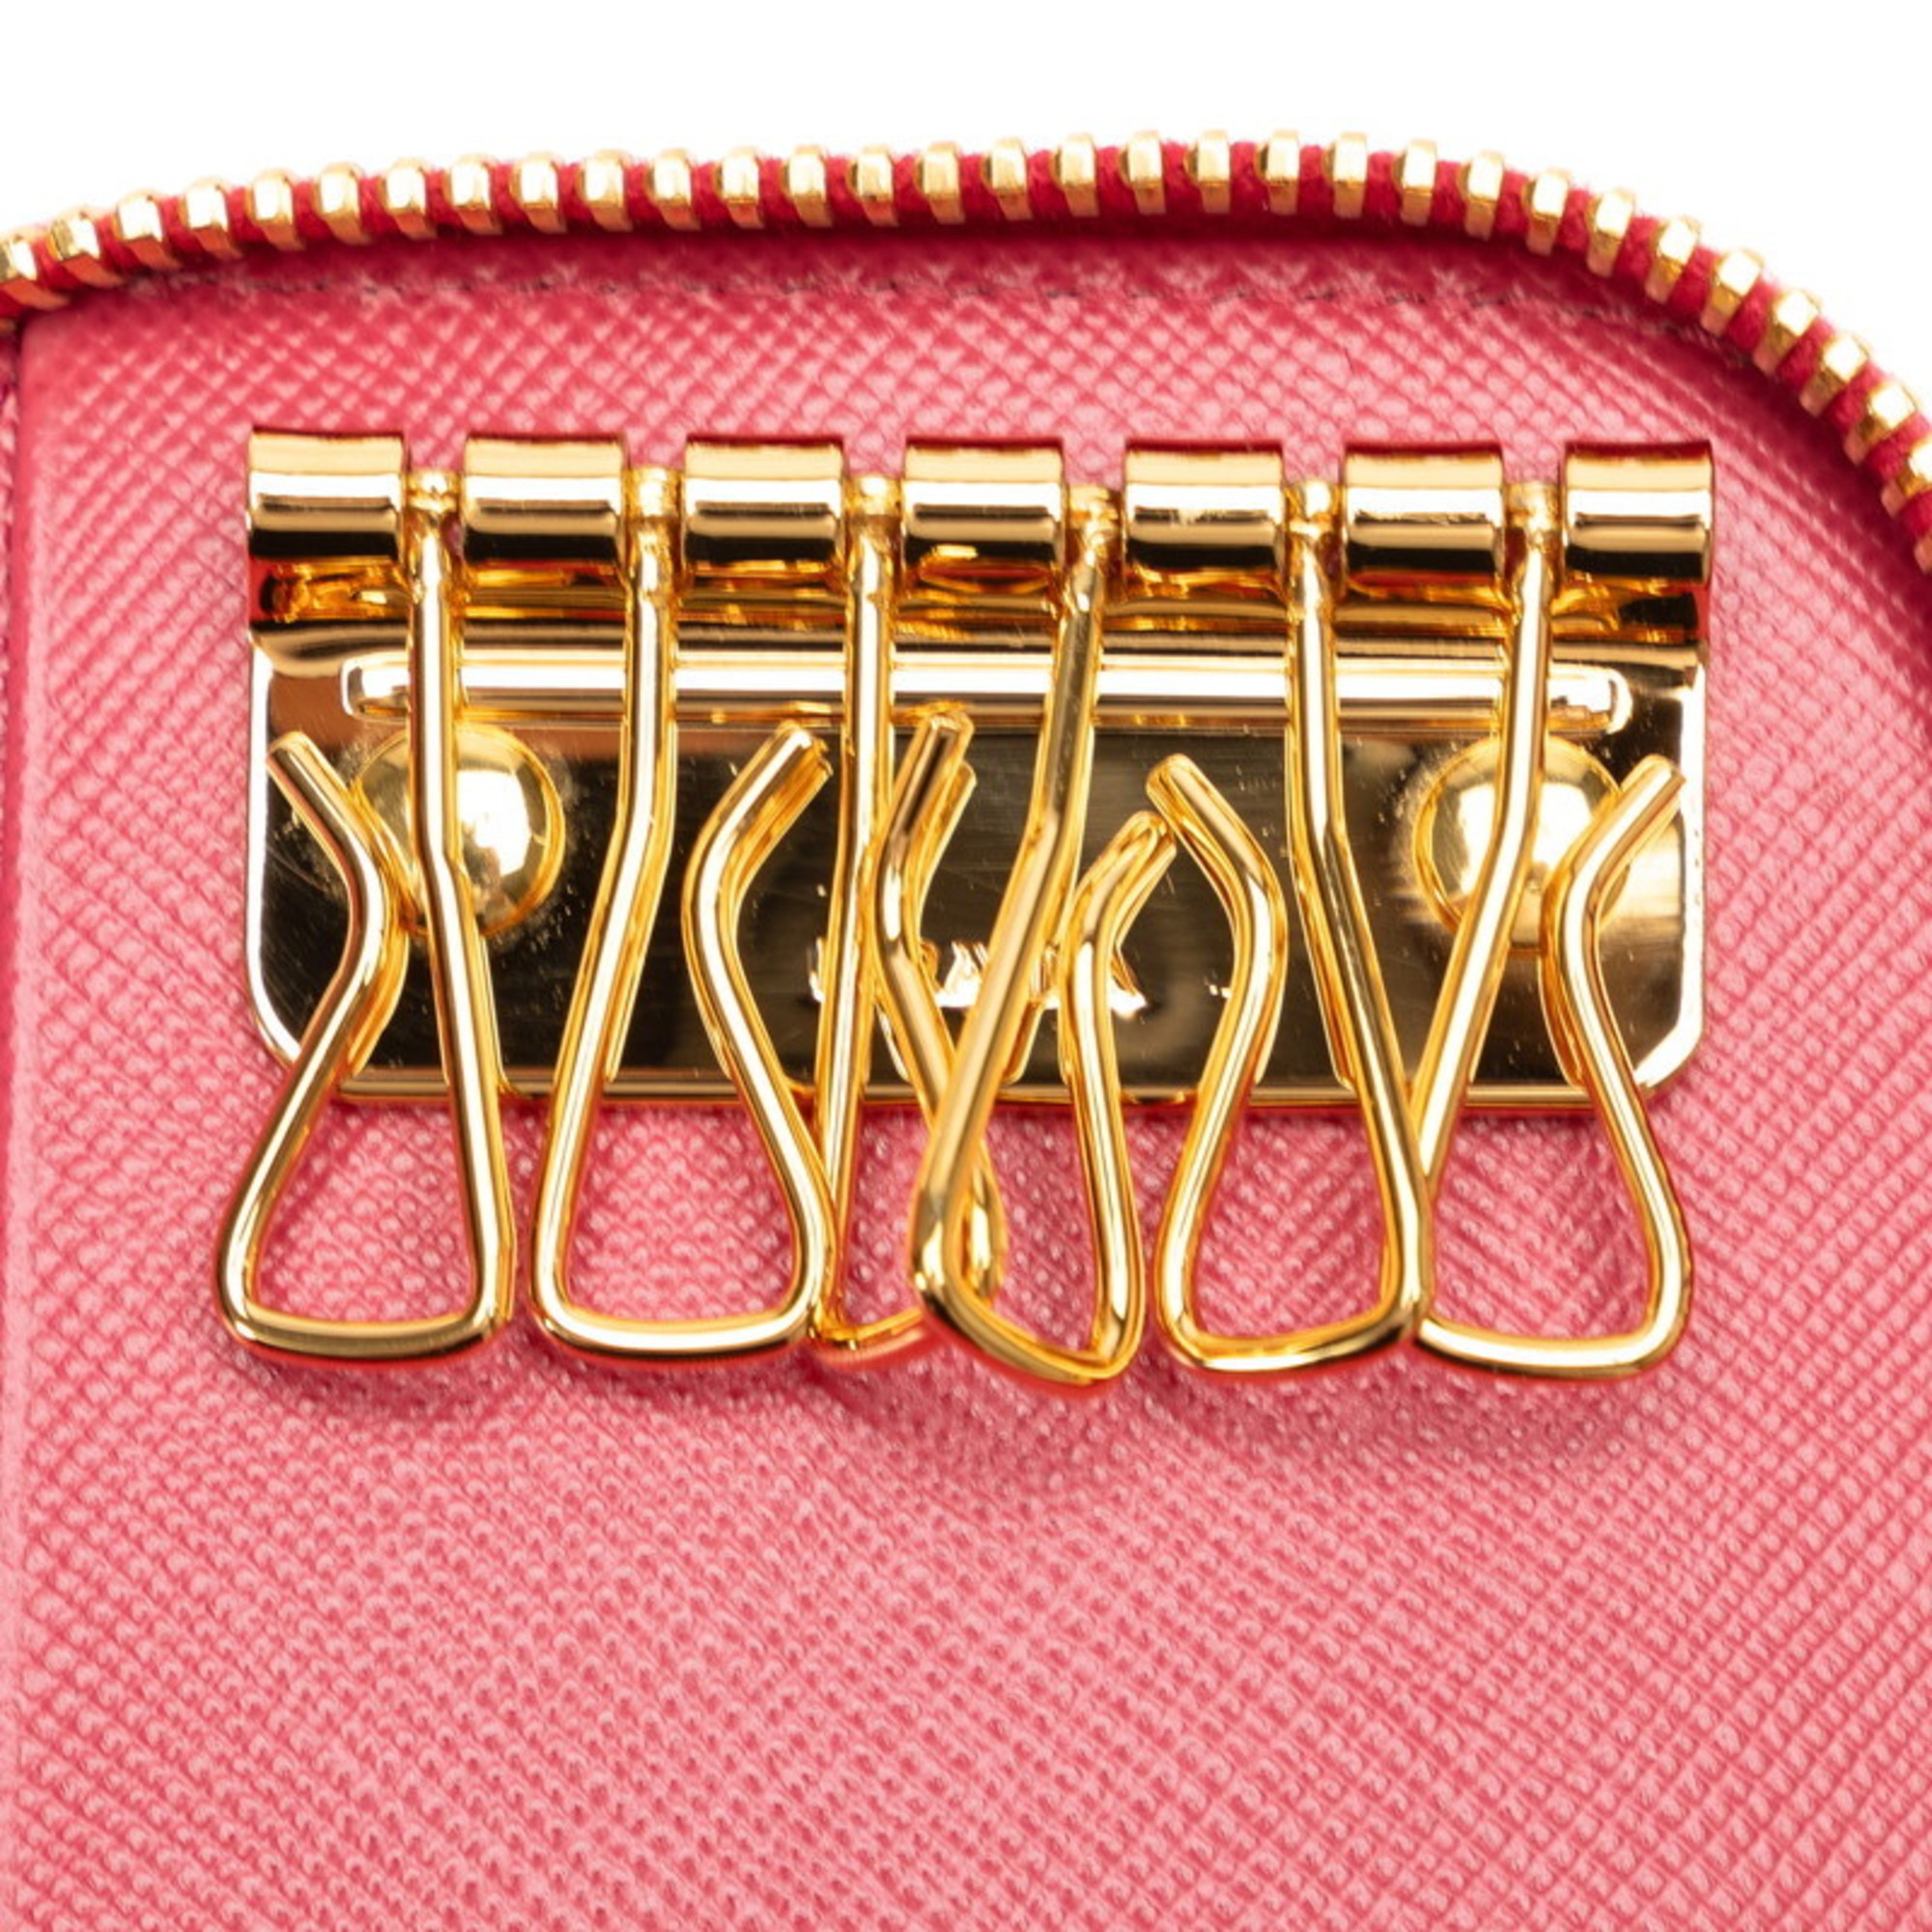 Prada Saffiano 6-ring round key case 1M0604 Pink leather Women's PRADA